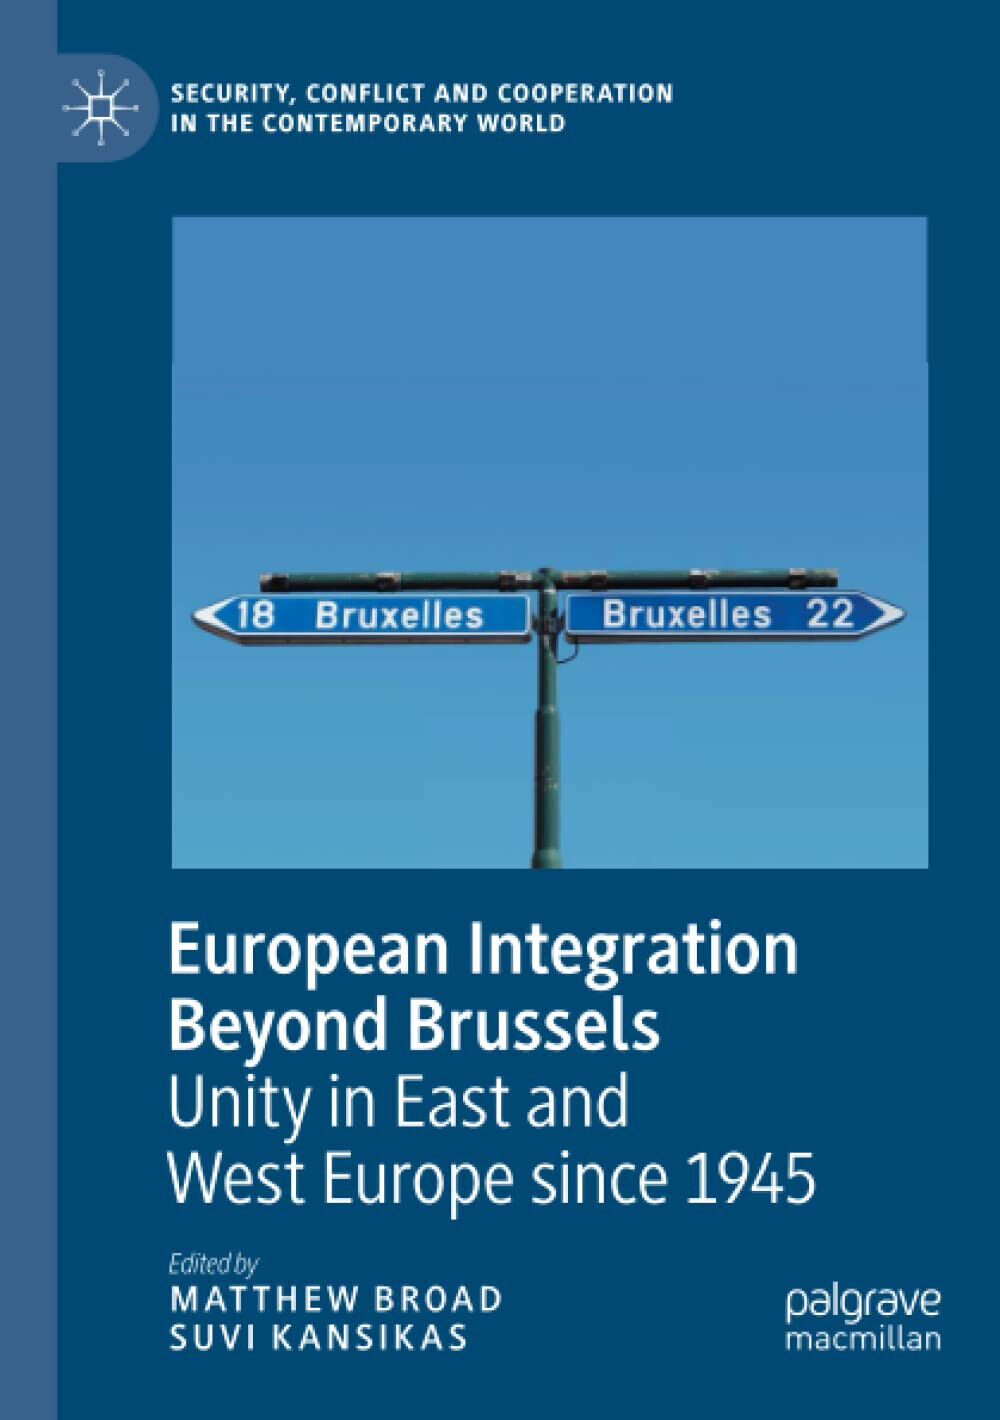 European Integration Beyond Brussels - Matthew Broad - Palgrave Macmillan, 2021